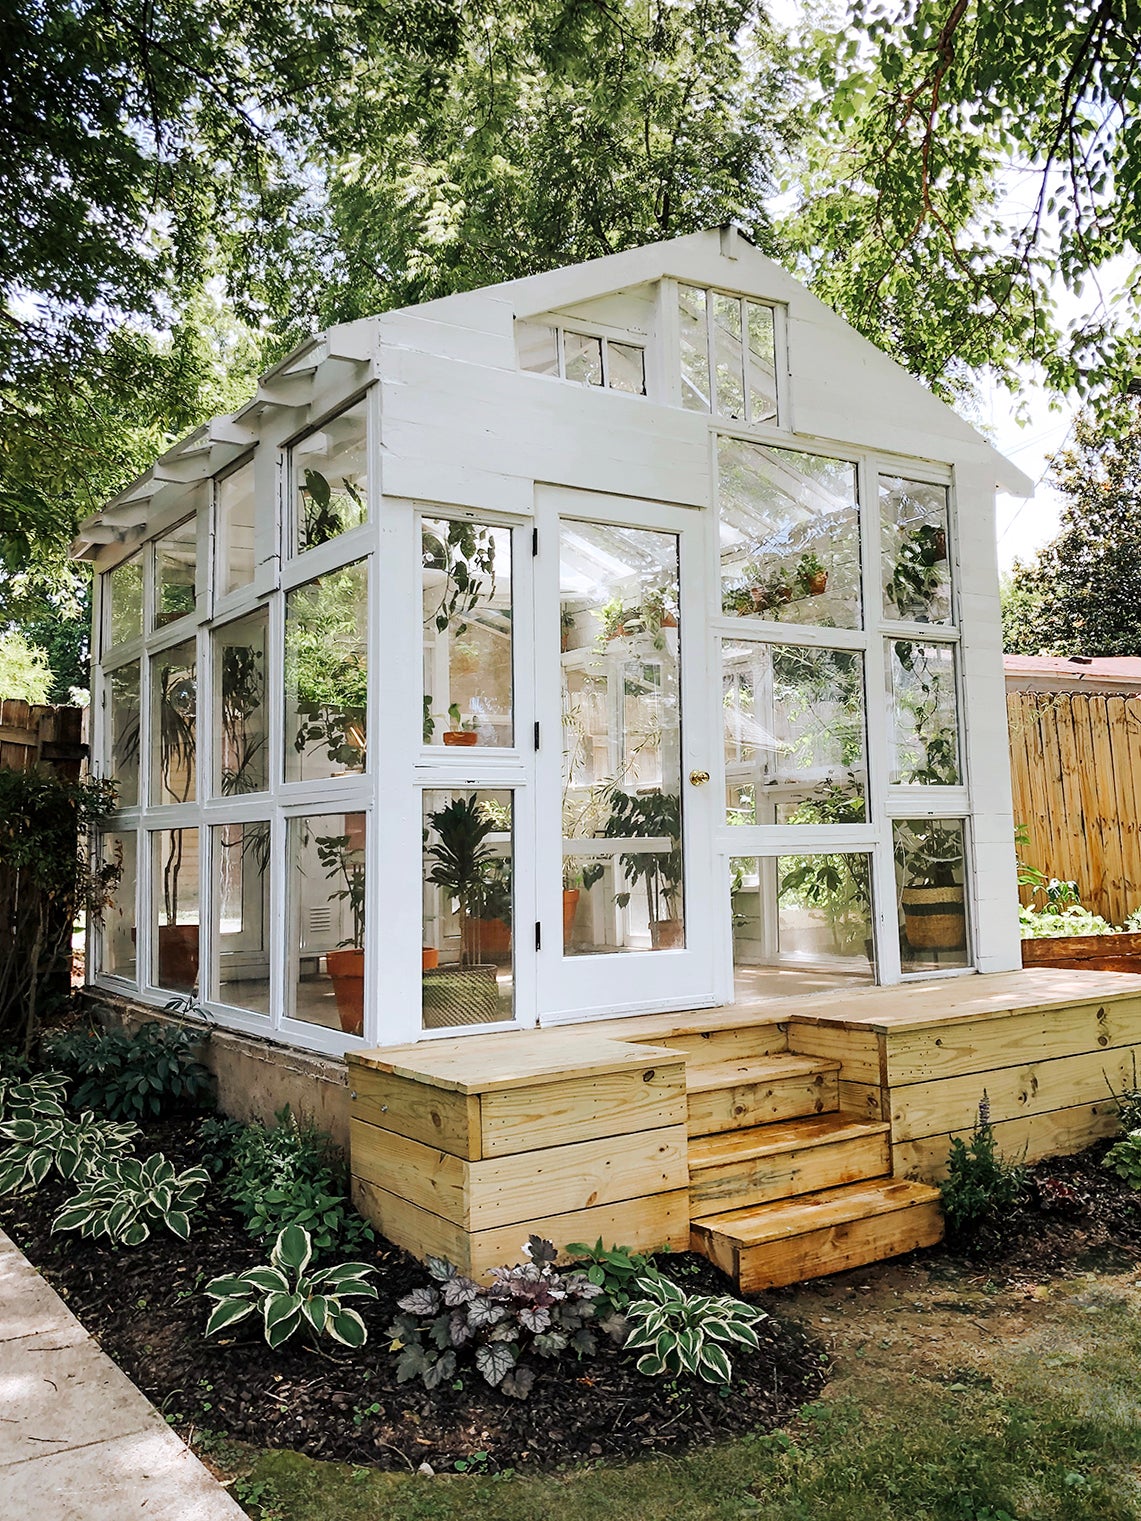 Exterior of backyard greenhouse